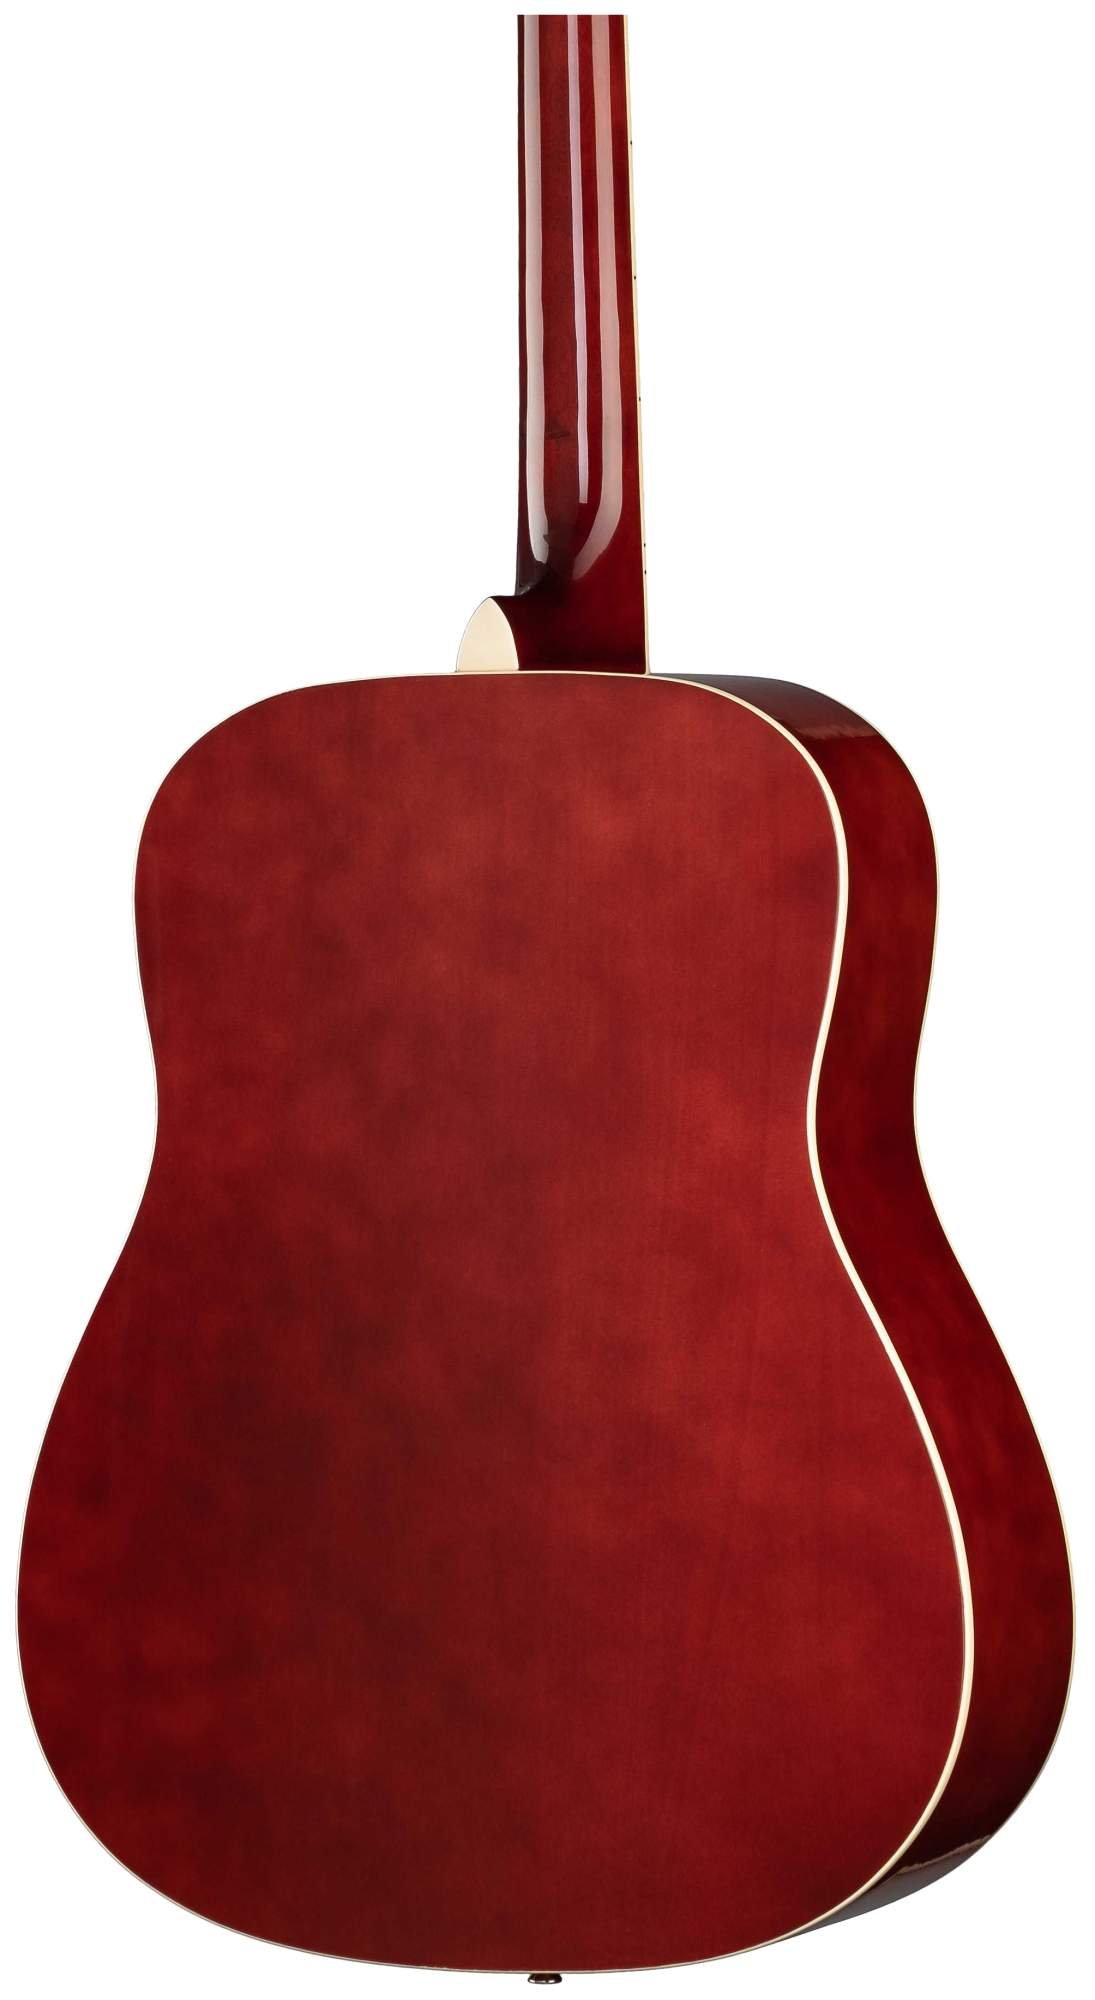 F630-n acoustic guitar, color natural, Caraya - AliExpress